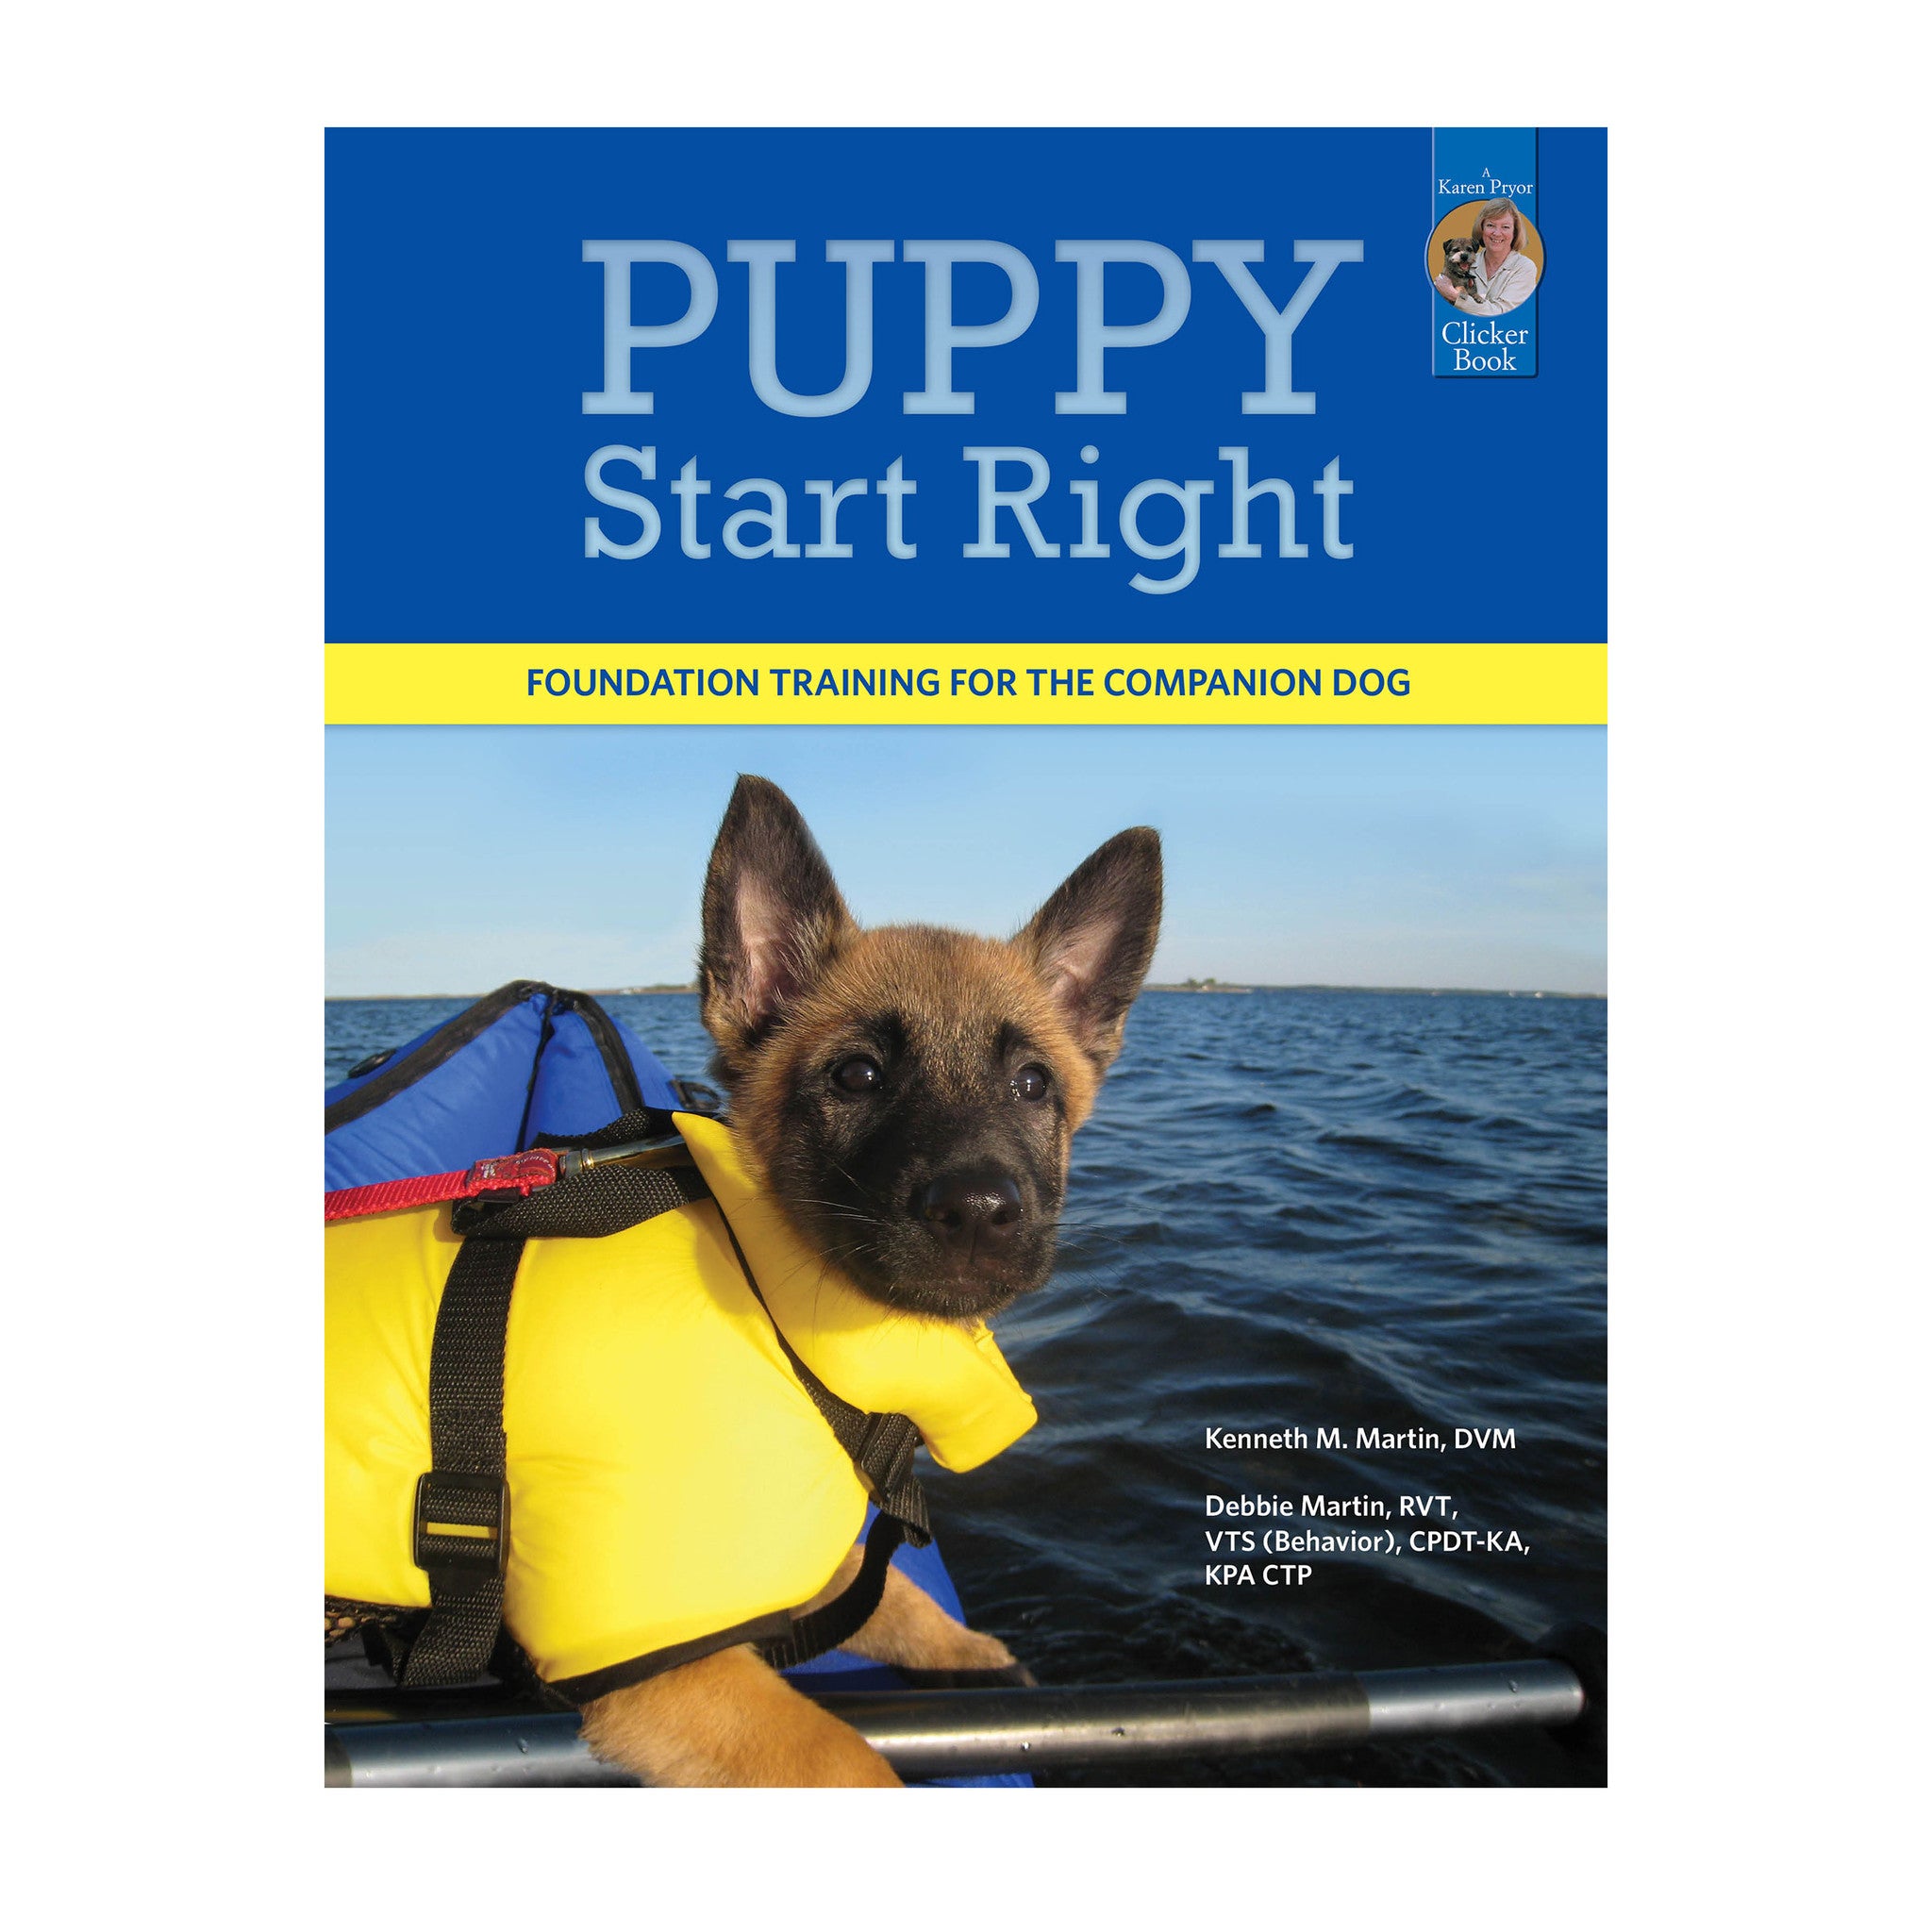 Puppy Training Books